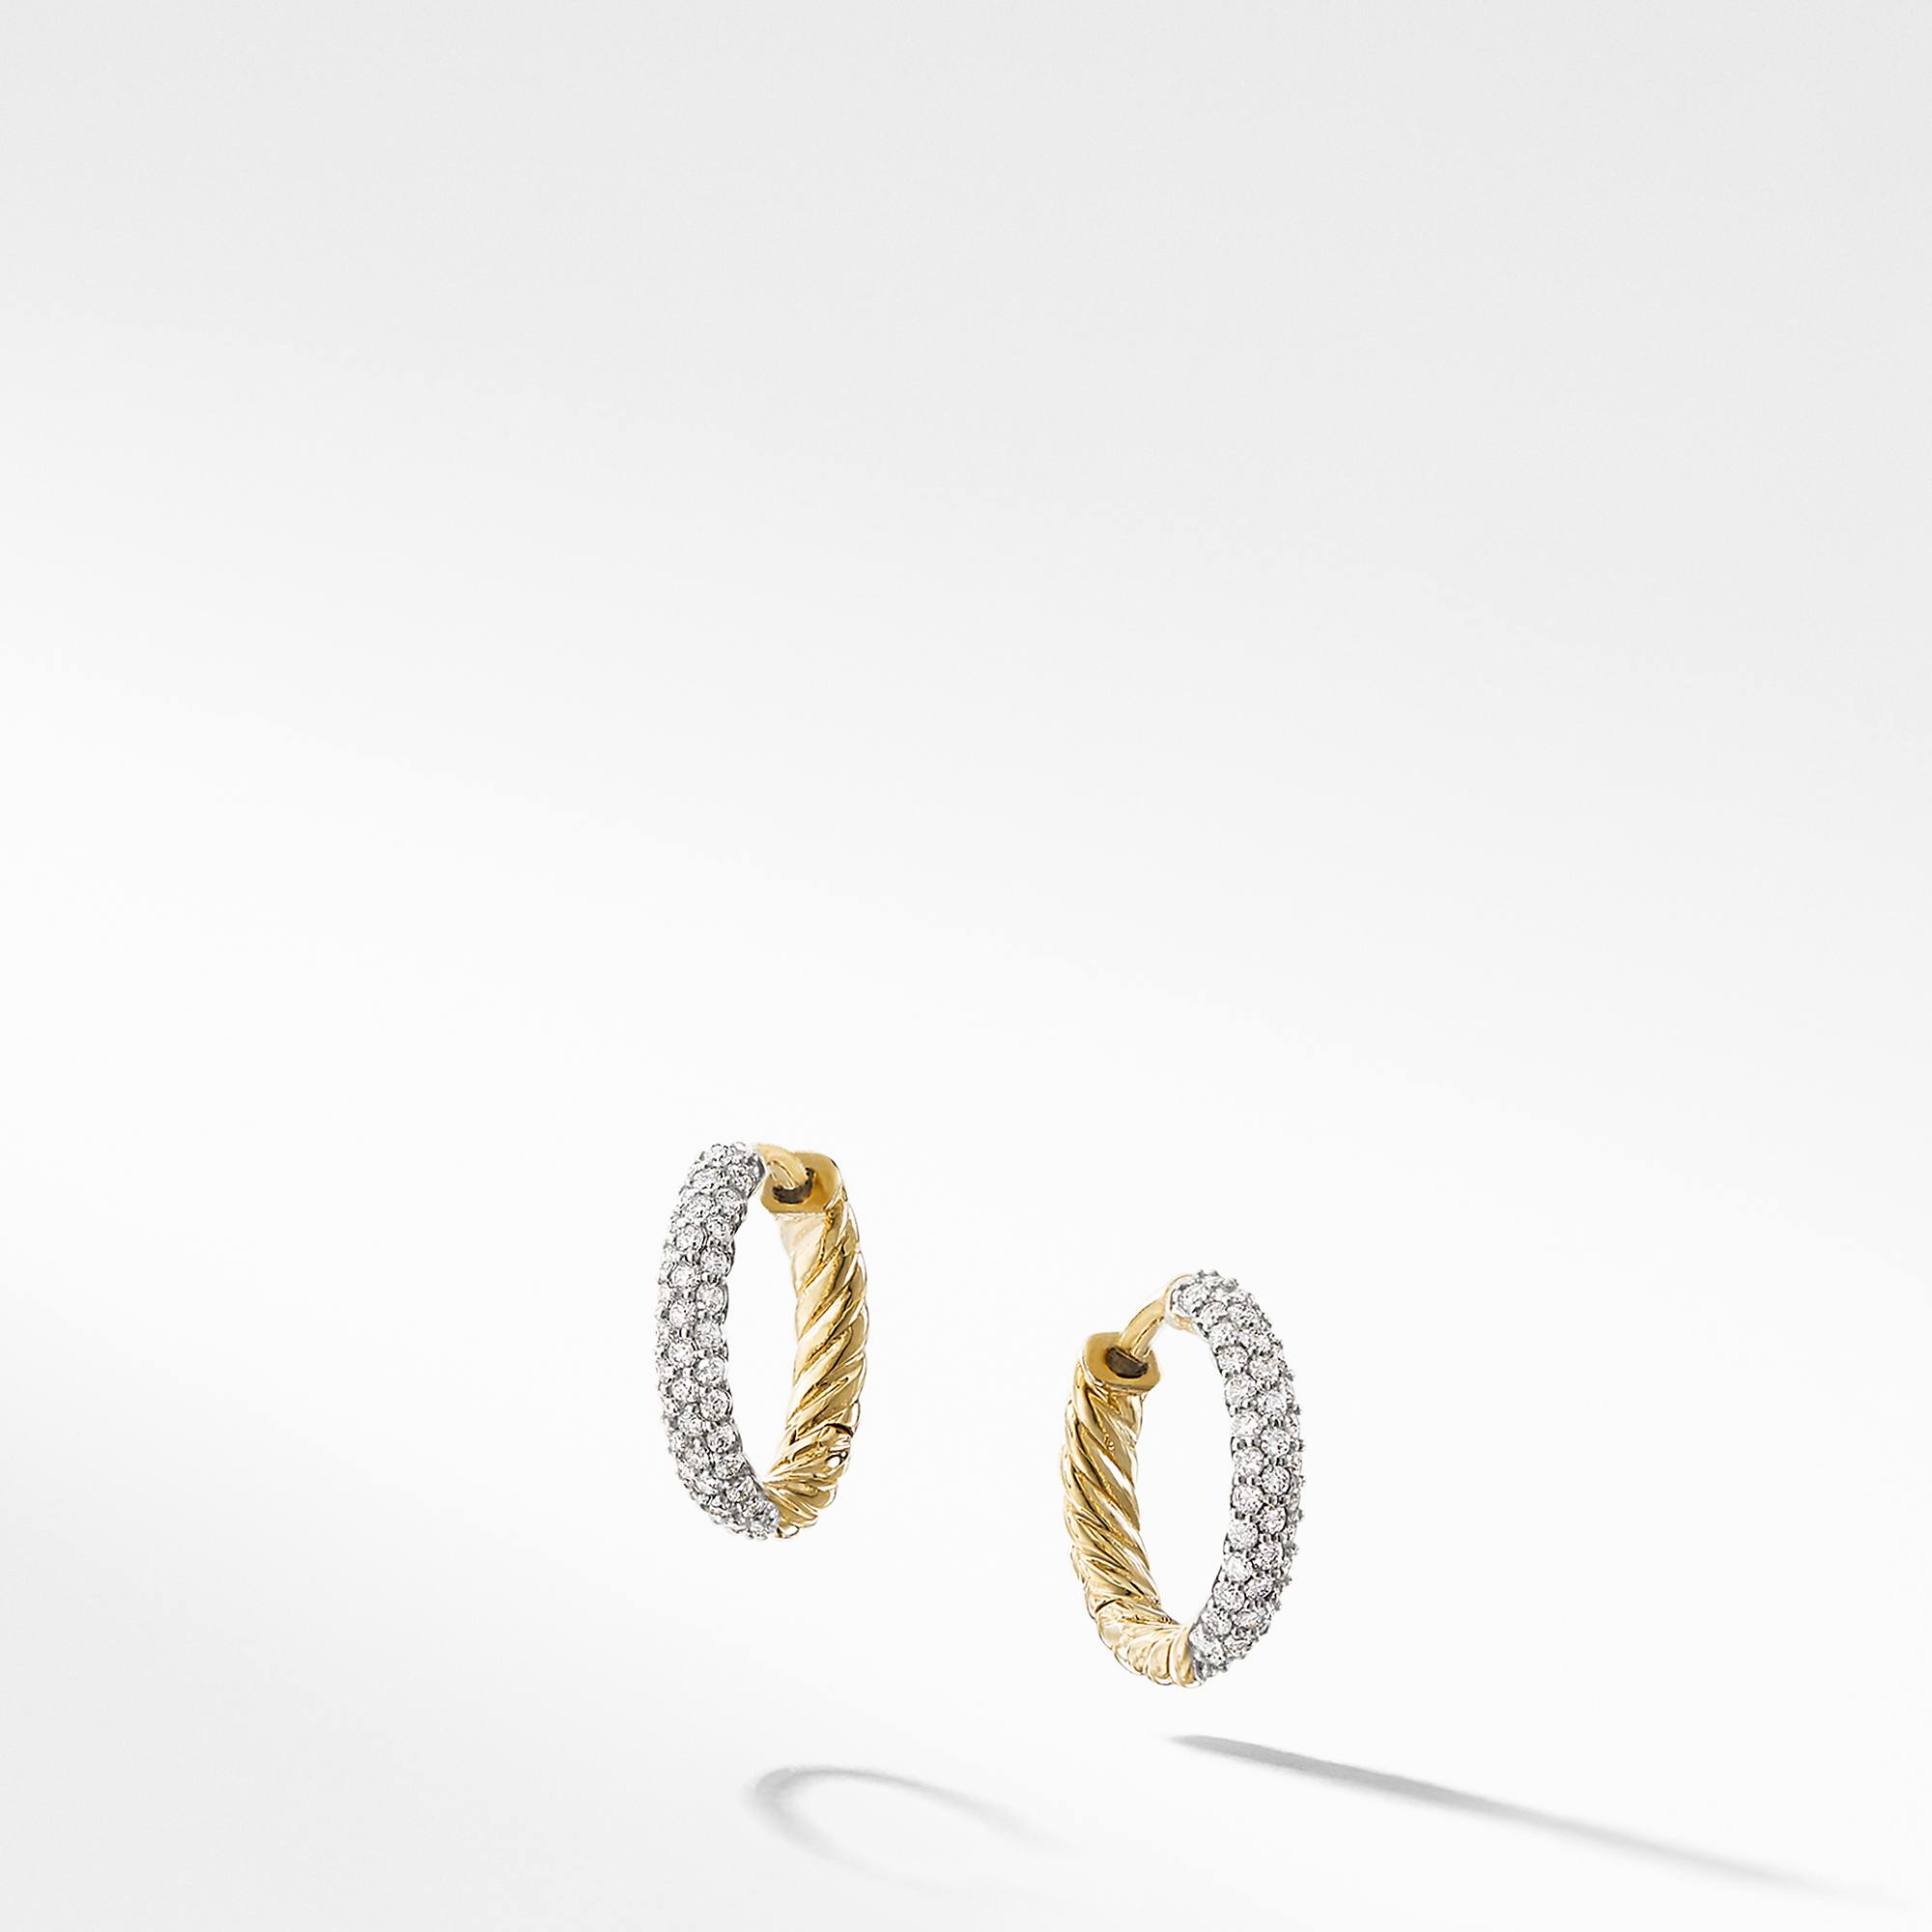 David Yurman Petite Pave Earrings with Diamonds in 18K Gold 0